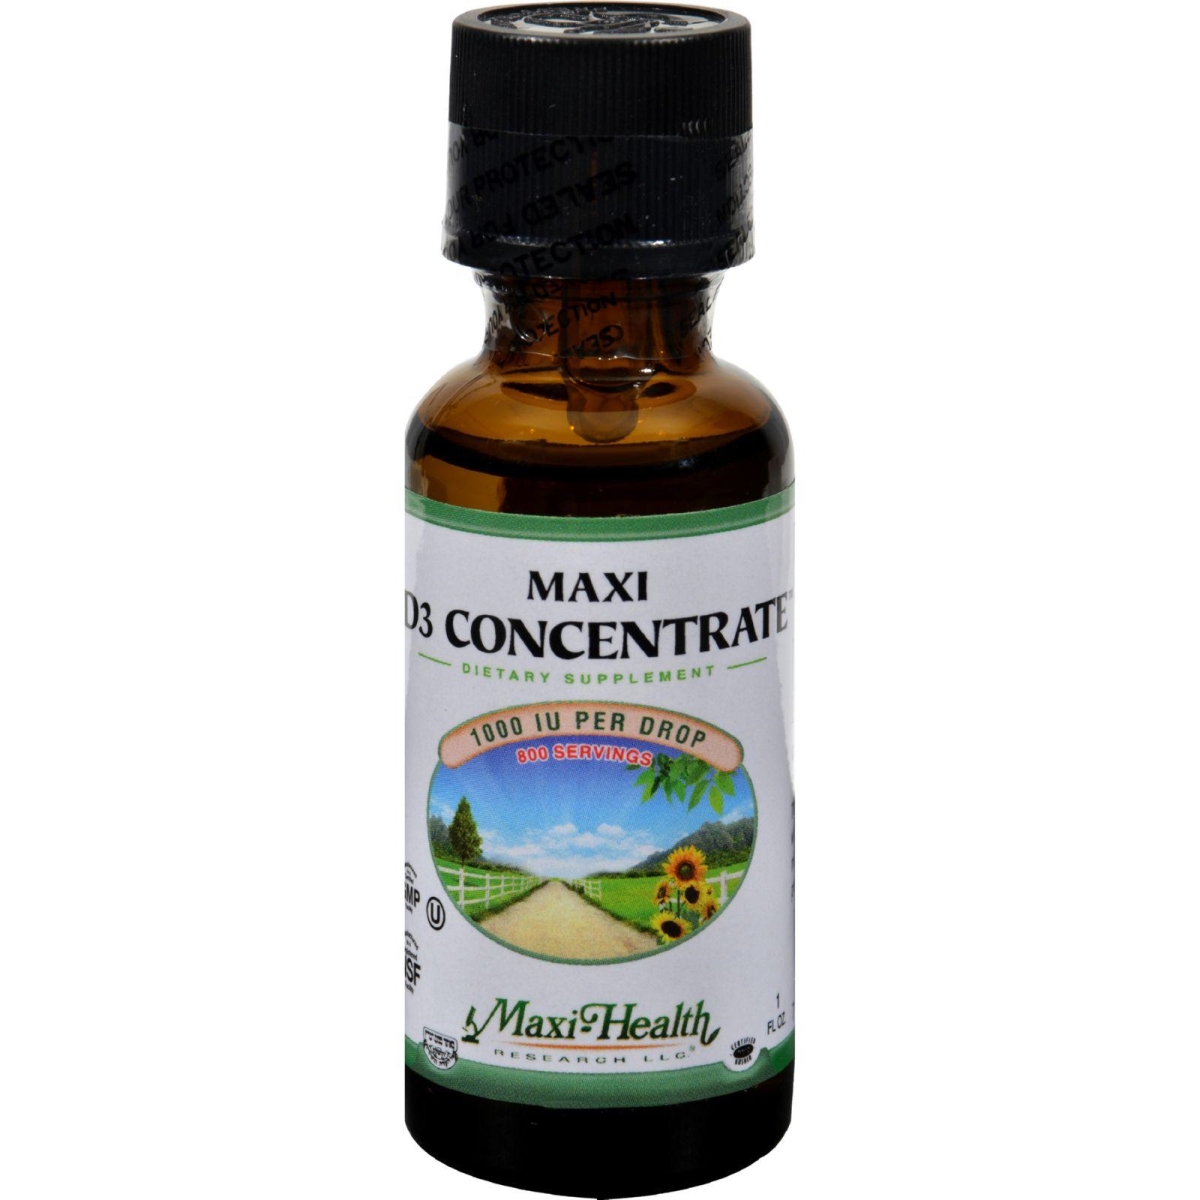 Picture of Maxi Health Kosher Vitamins HG0135236 1 fl oz Maxi Health Maxi D3 Concentrate - 1000 IU